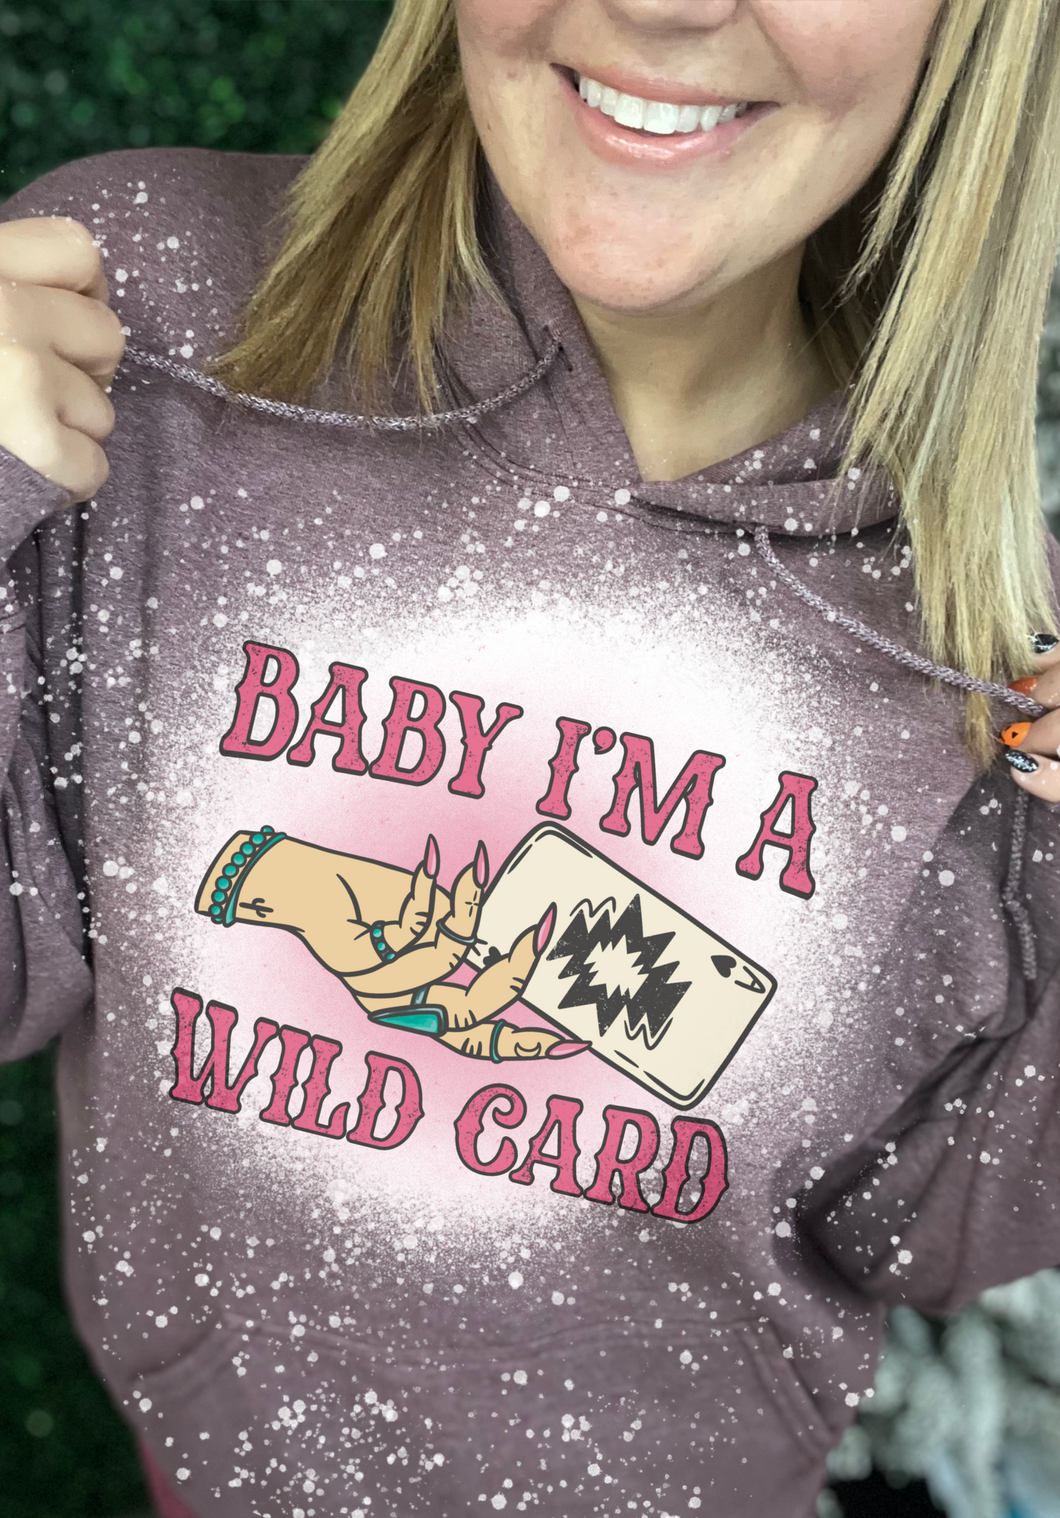 Baby I’m a wild card